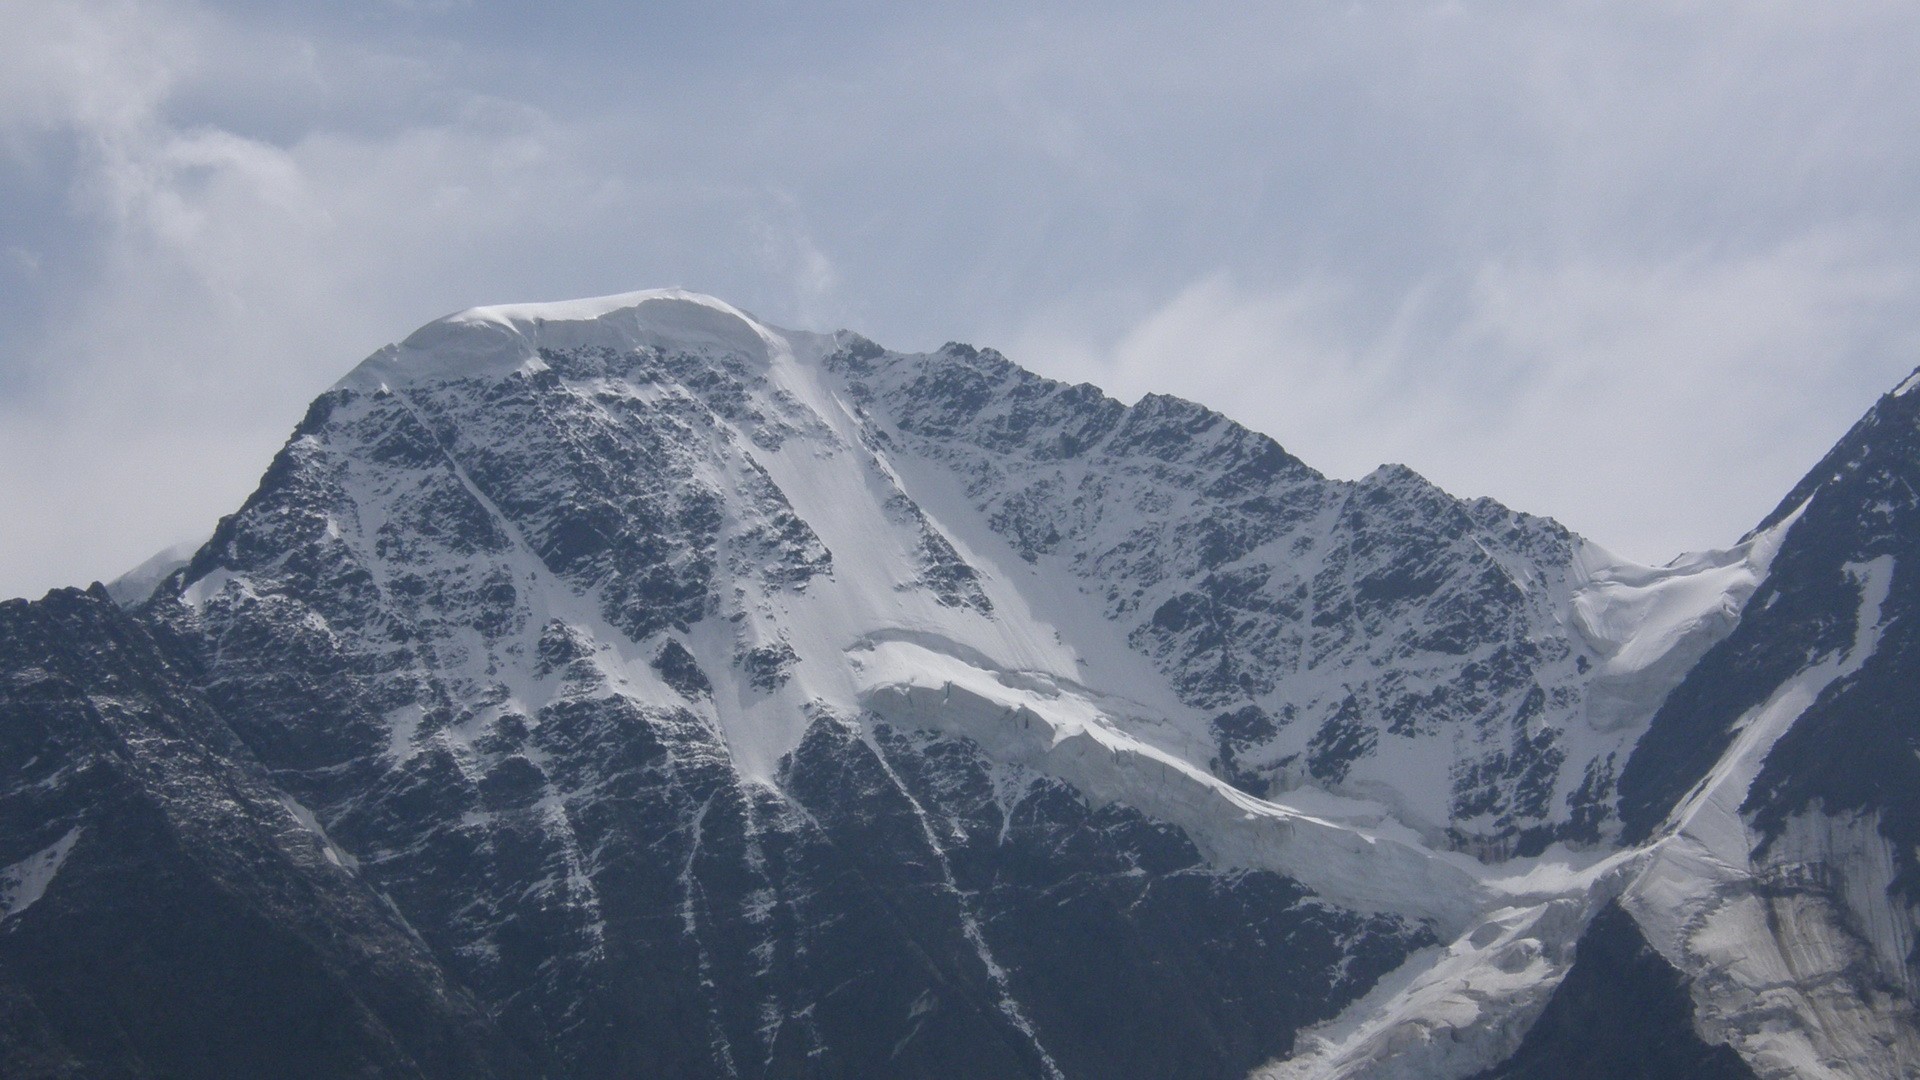 General 1920x1080 mountains snow rocks landscape nature Mount Elbrus Russia snowy peak